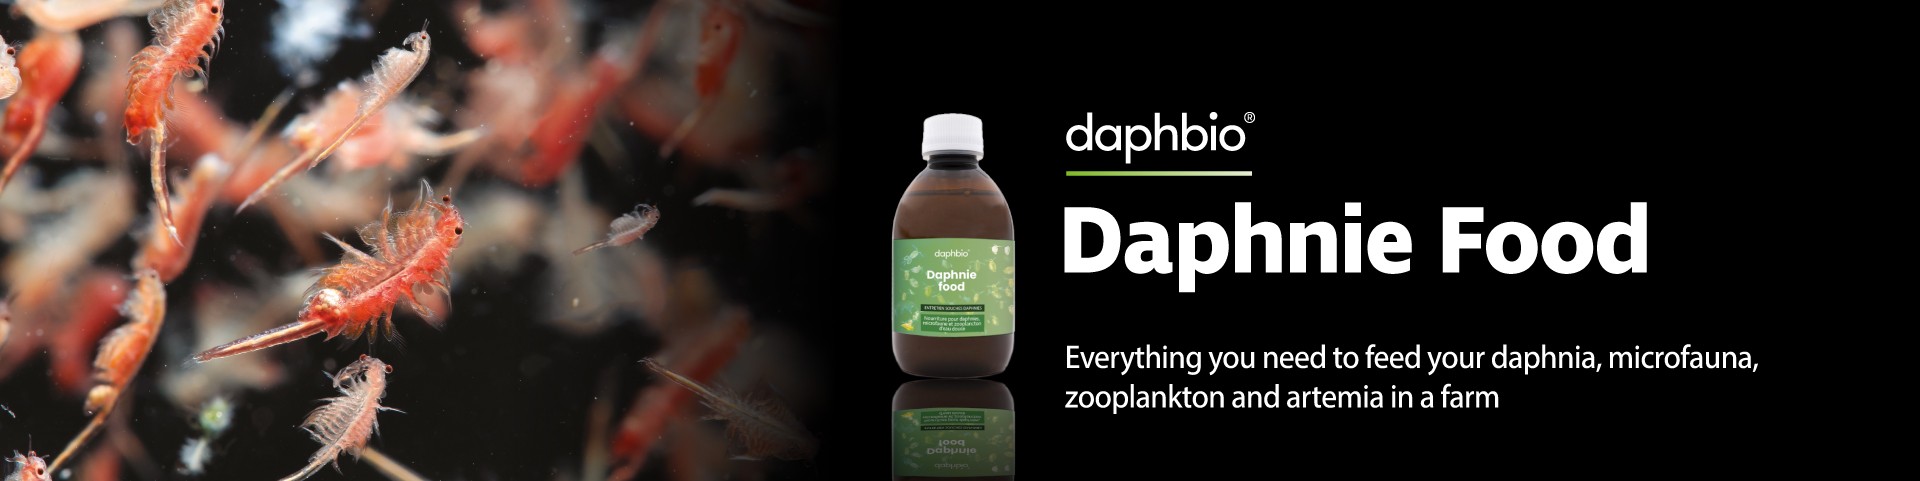 Daphbio - Daphnie Food